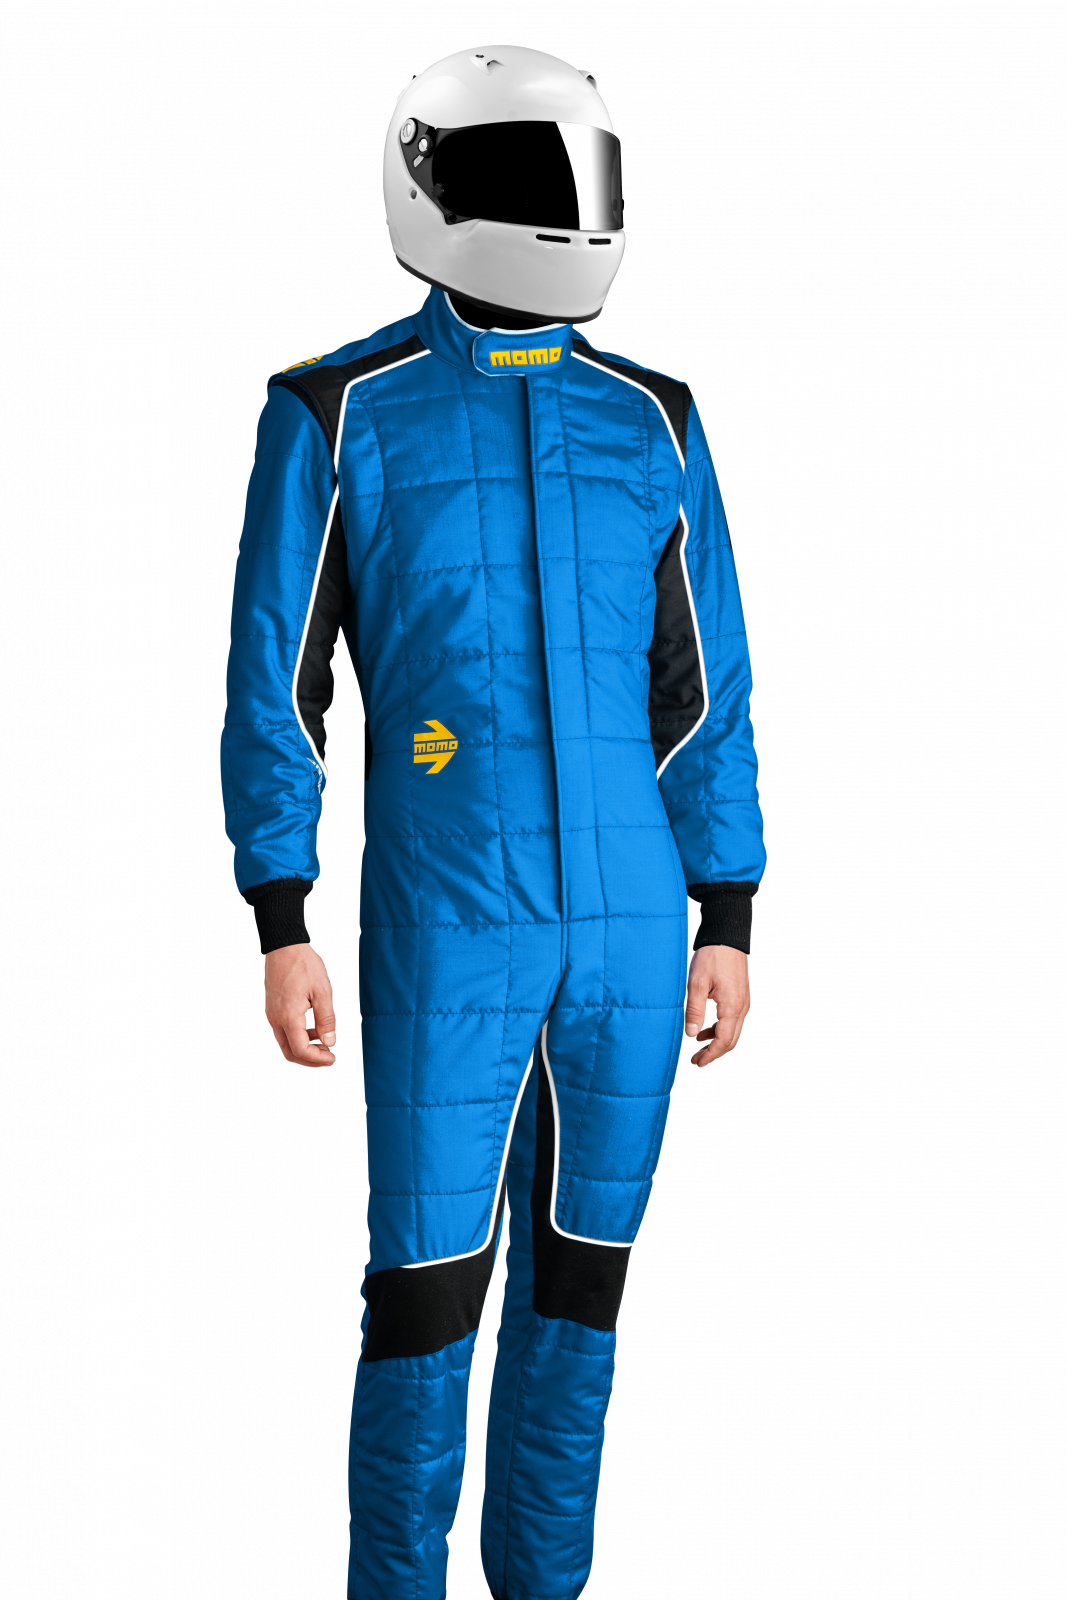 MOMO Corsa Evo Blue Size 54 Racing Suit TUCOEVOBLU54